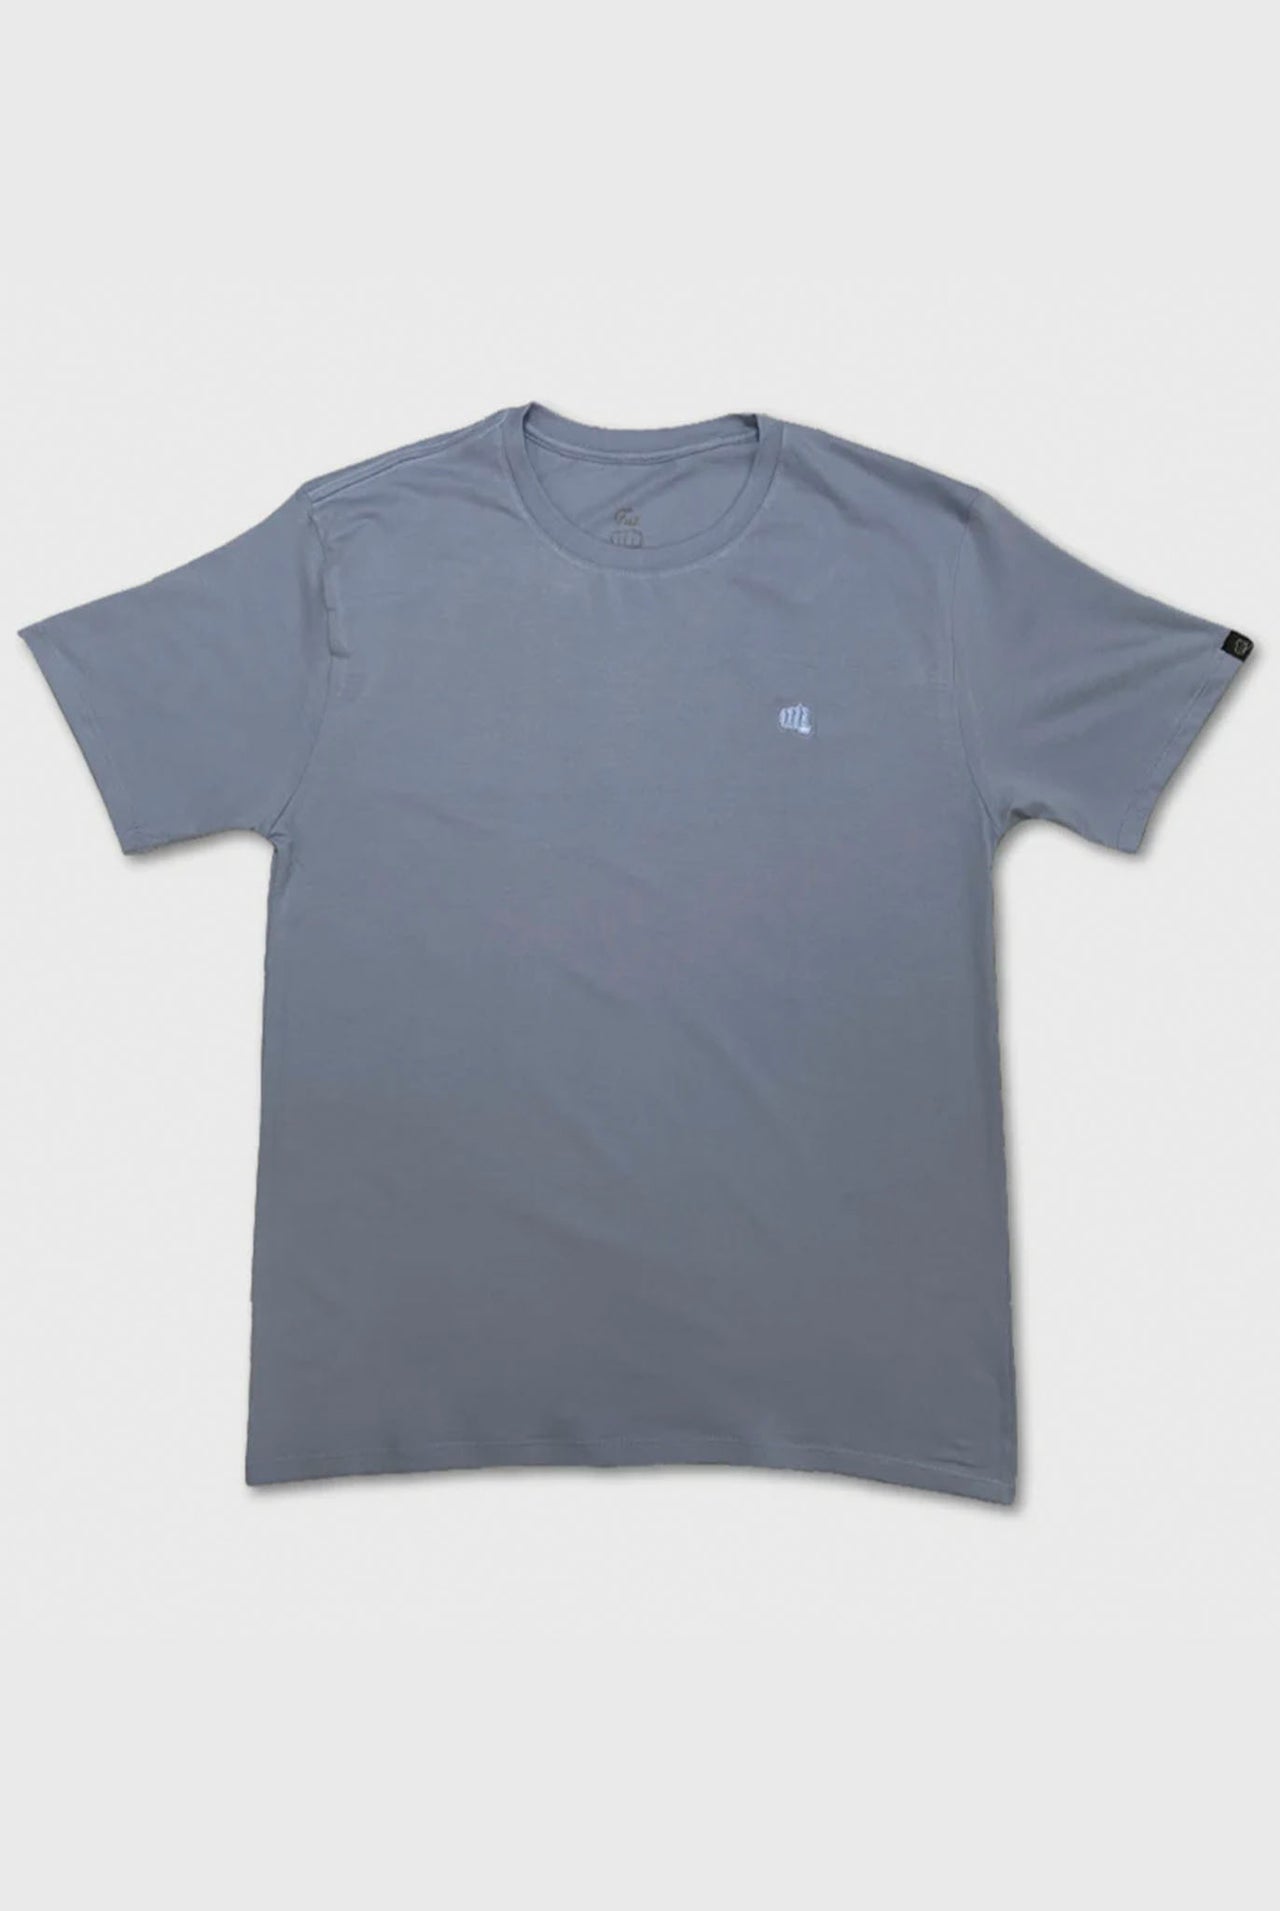 Camiseta Fist Basic Match Azul Grizaceo